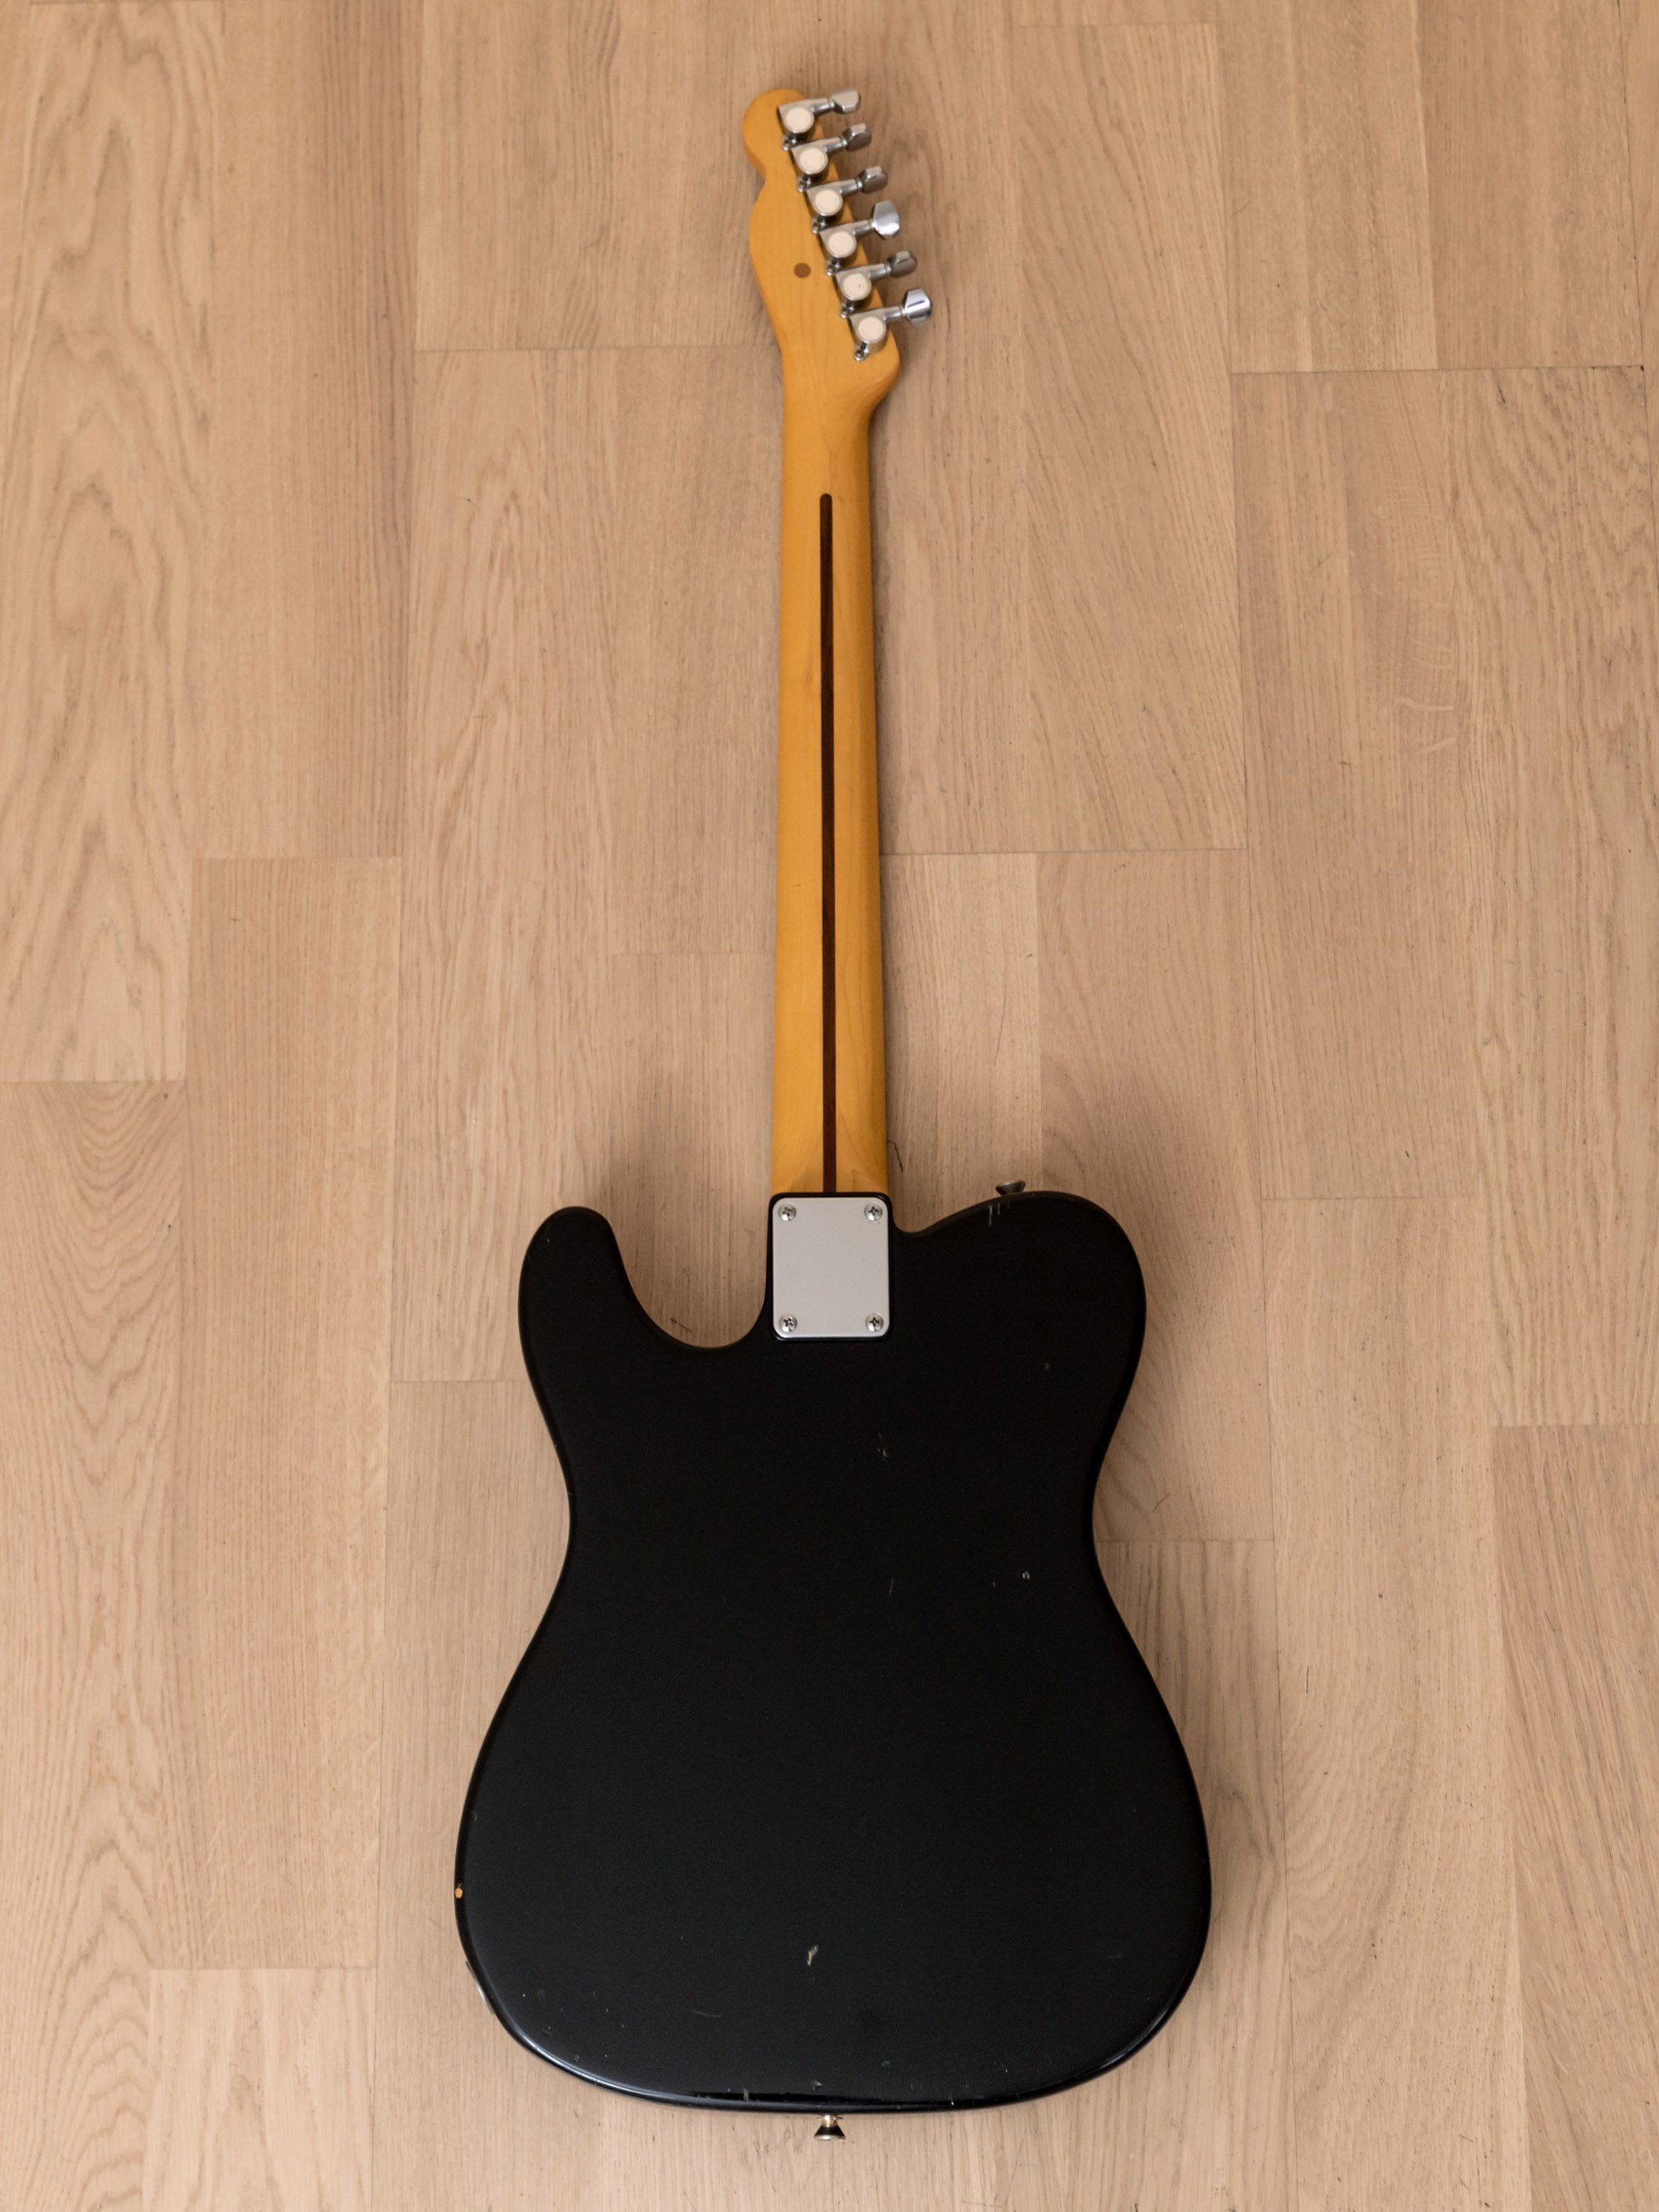 1986 Squier by Fender Telecaster Model CTL-30 Vintage Electric Guitar Black, Japan MIJ Fujigen